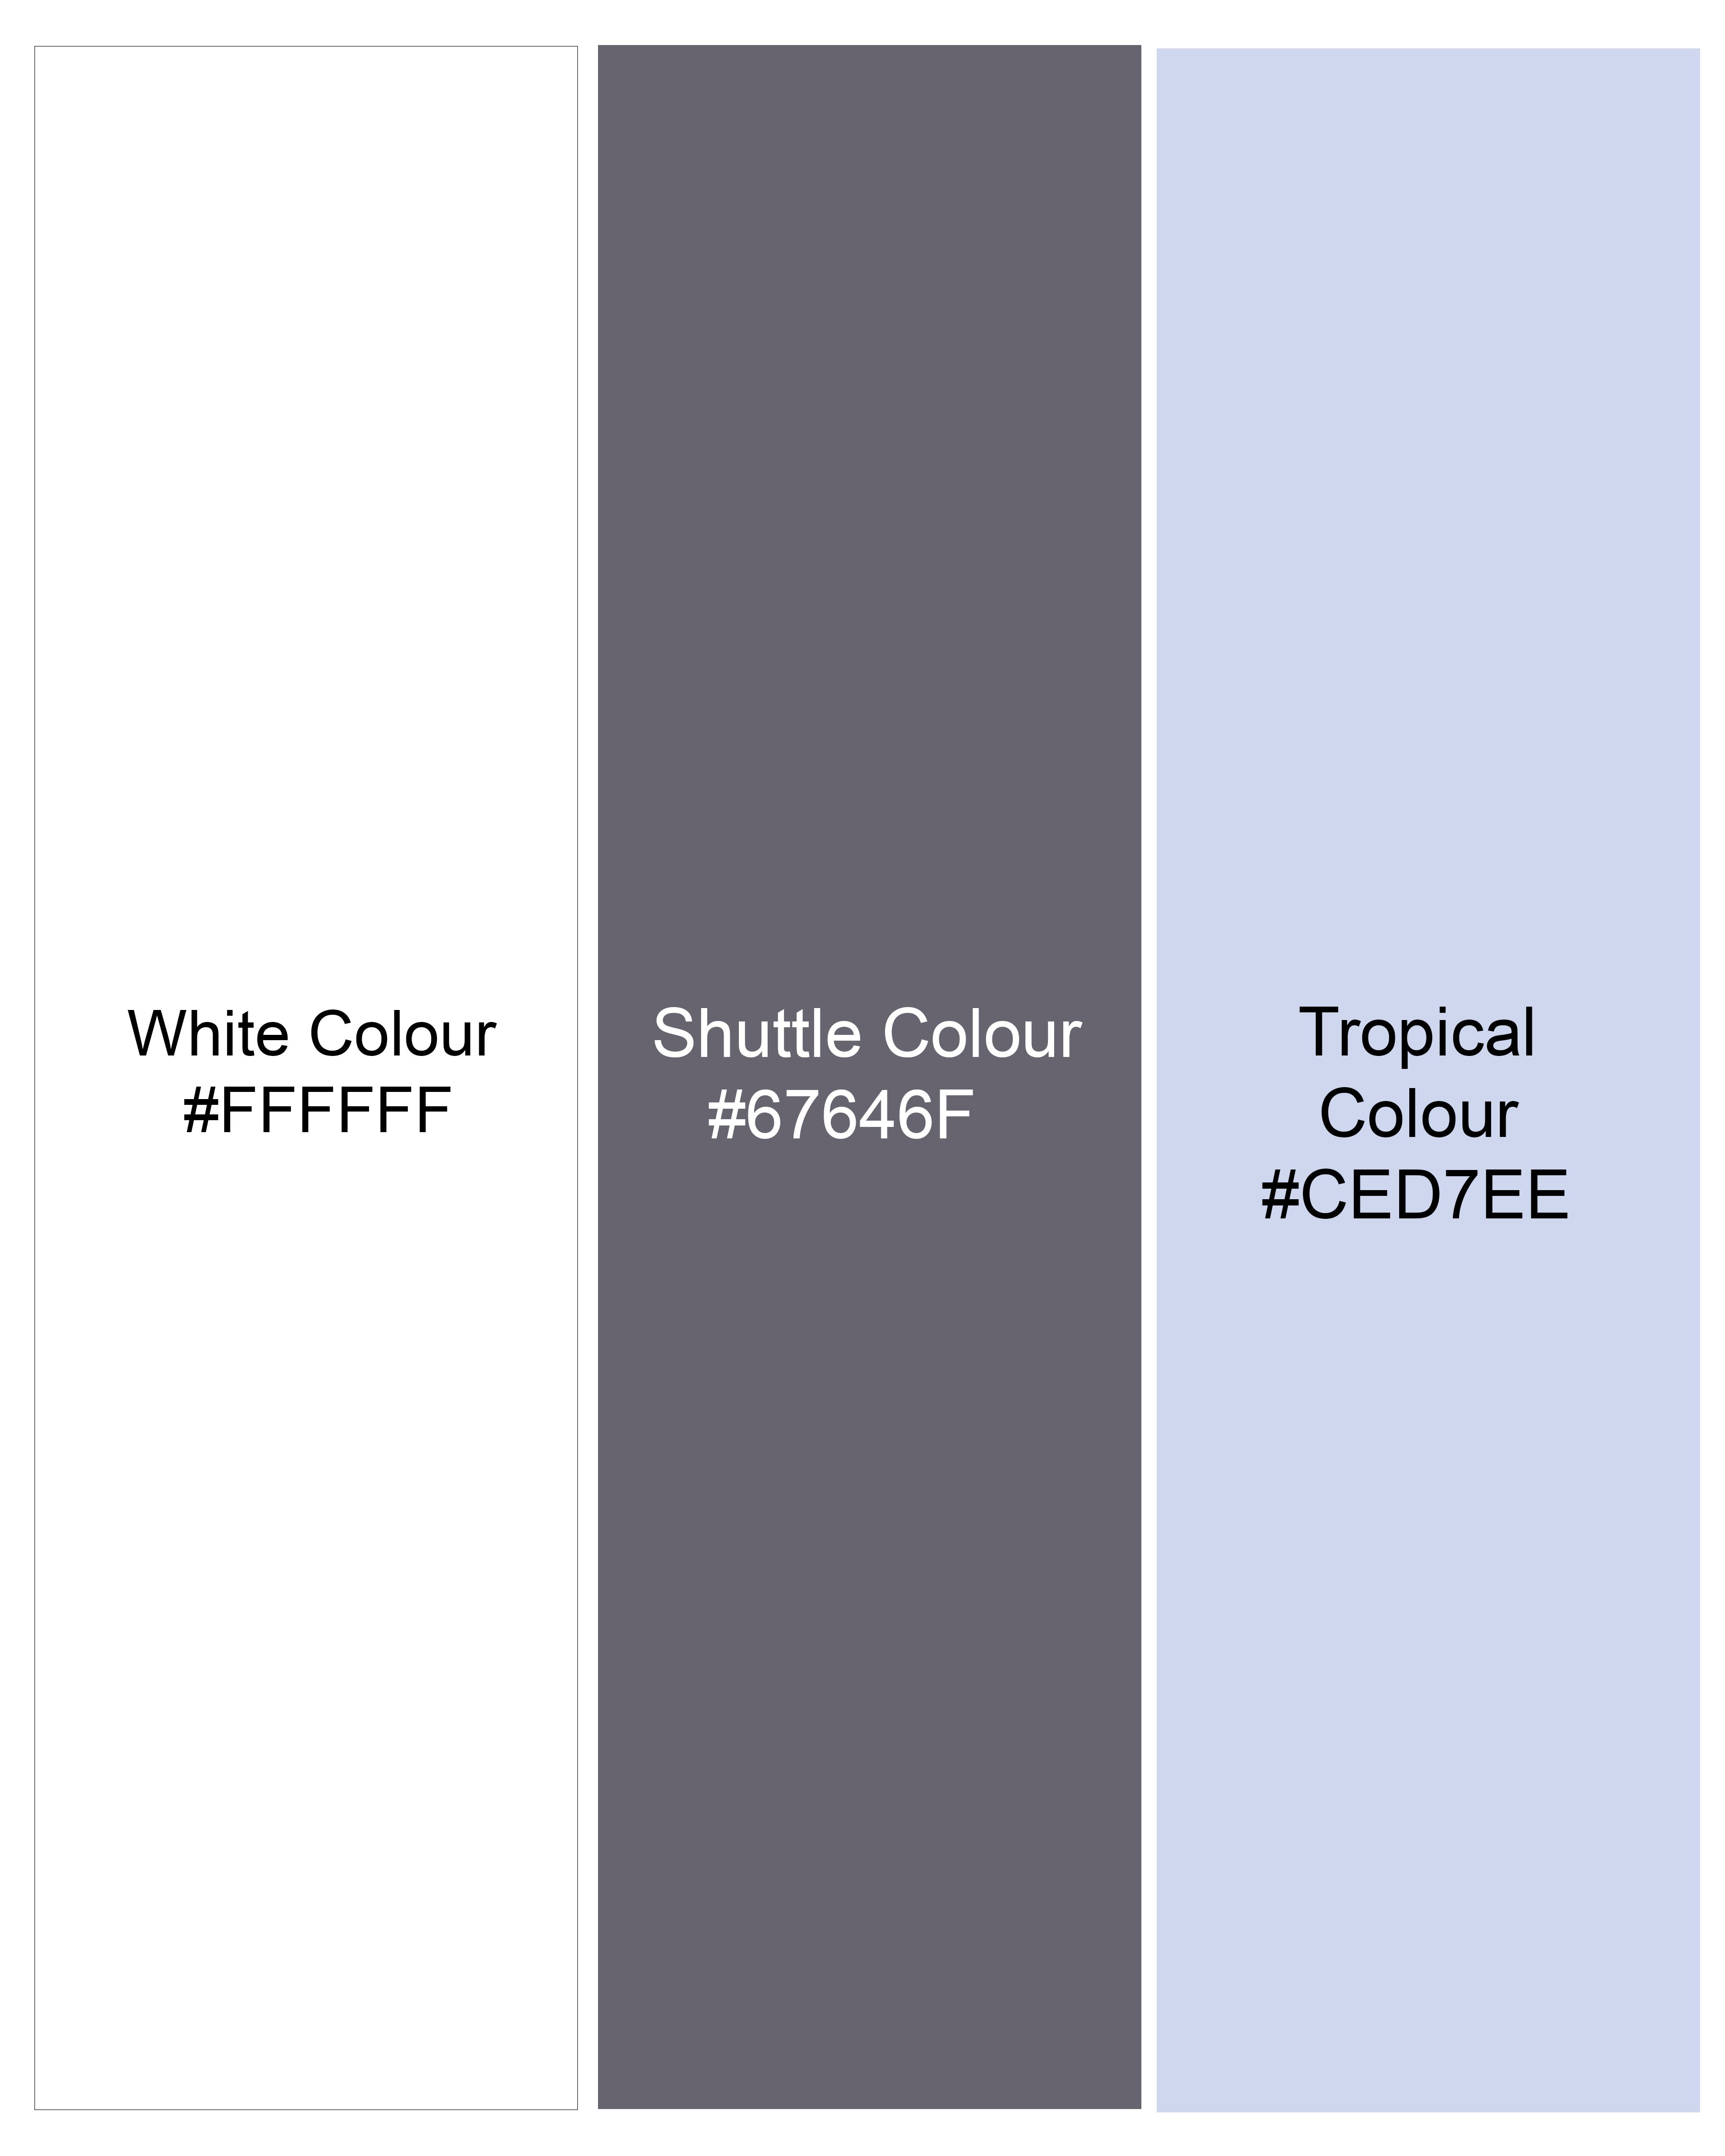 Bright White with Shuttle Gray and Tropical Blue Premium Cotton Designer Shirt 9633-P293-38,9633-P293-H-38,9633-P293-39,9633-P293-H-39,9633-P293-40,9633-P293-H-40,9633-P293-42,9633-P293-H-42,9633-P293-44,9633-P293-H-44,9633-P293-46,9633-P293-H-46,9633-P293-48,9633-P293-H-48,9633-P293-50,9633-P293-H-50,9633-P293-52,9633-P293-H-52